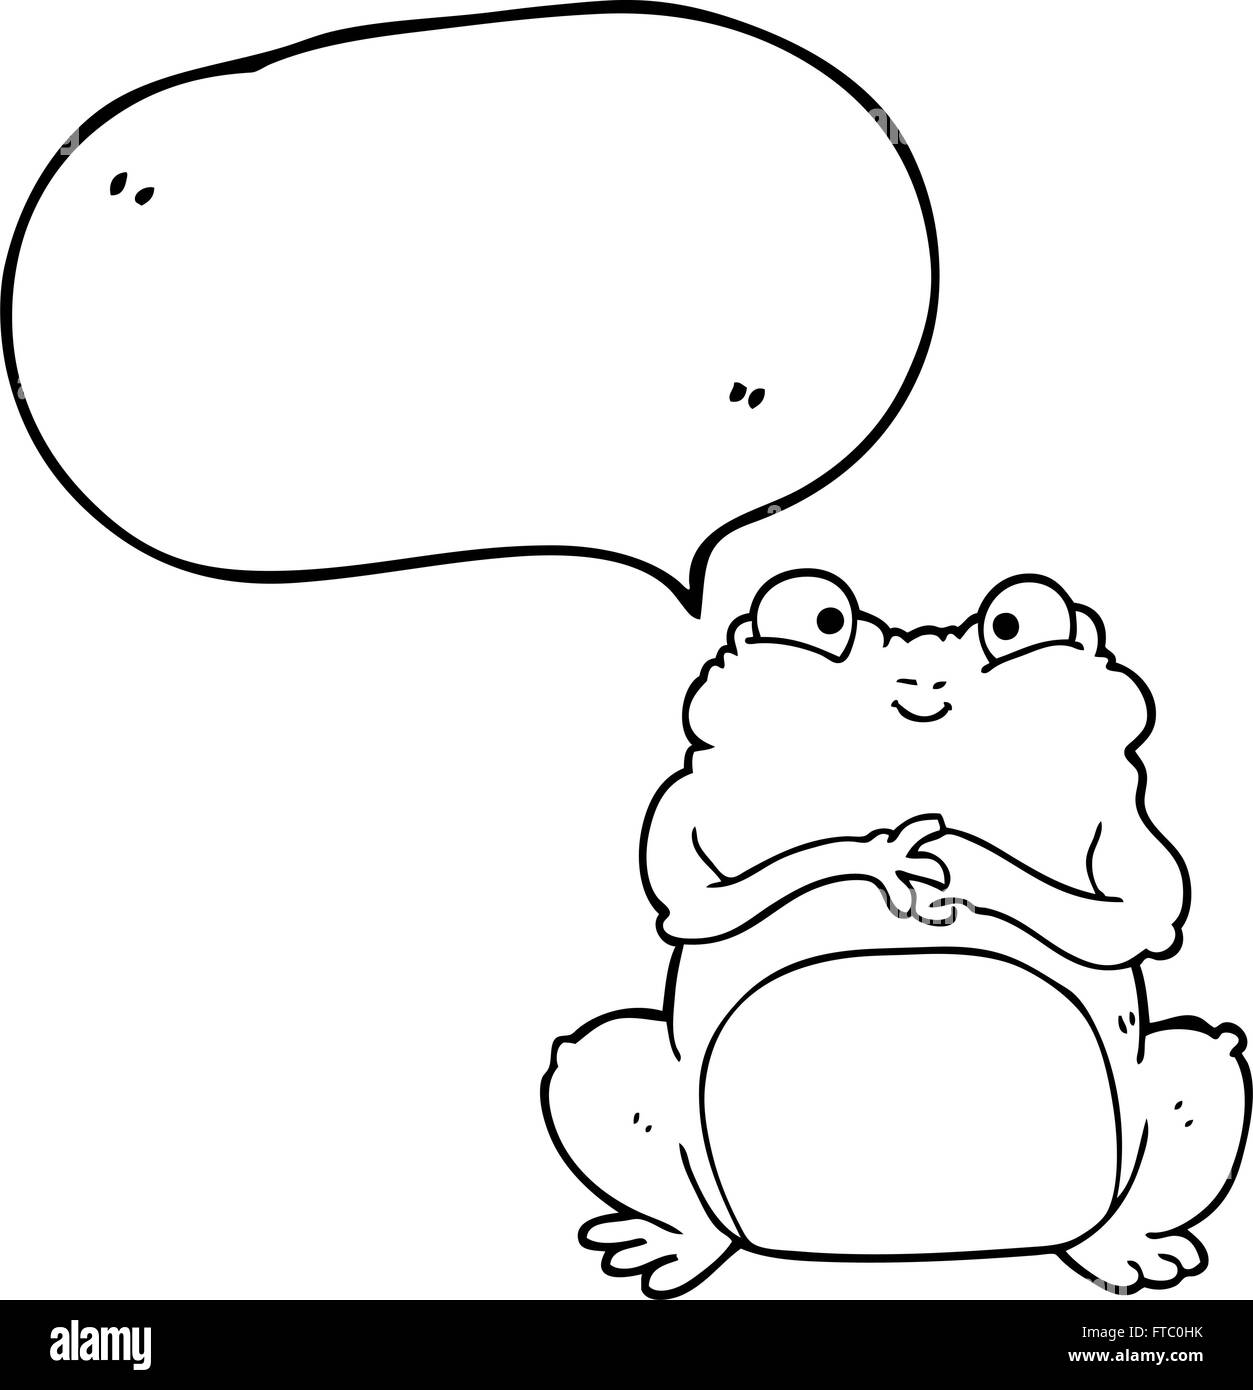 freehand drawn speech bubble cartoon funny frog Stock Vector